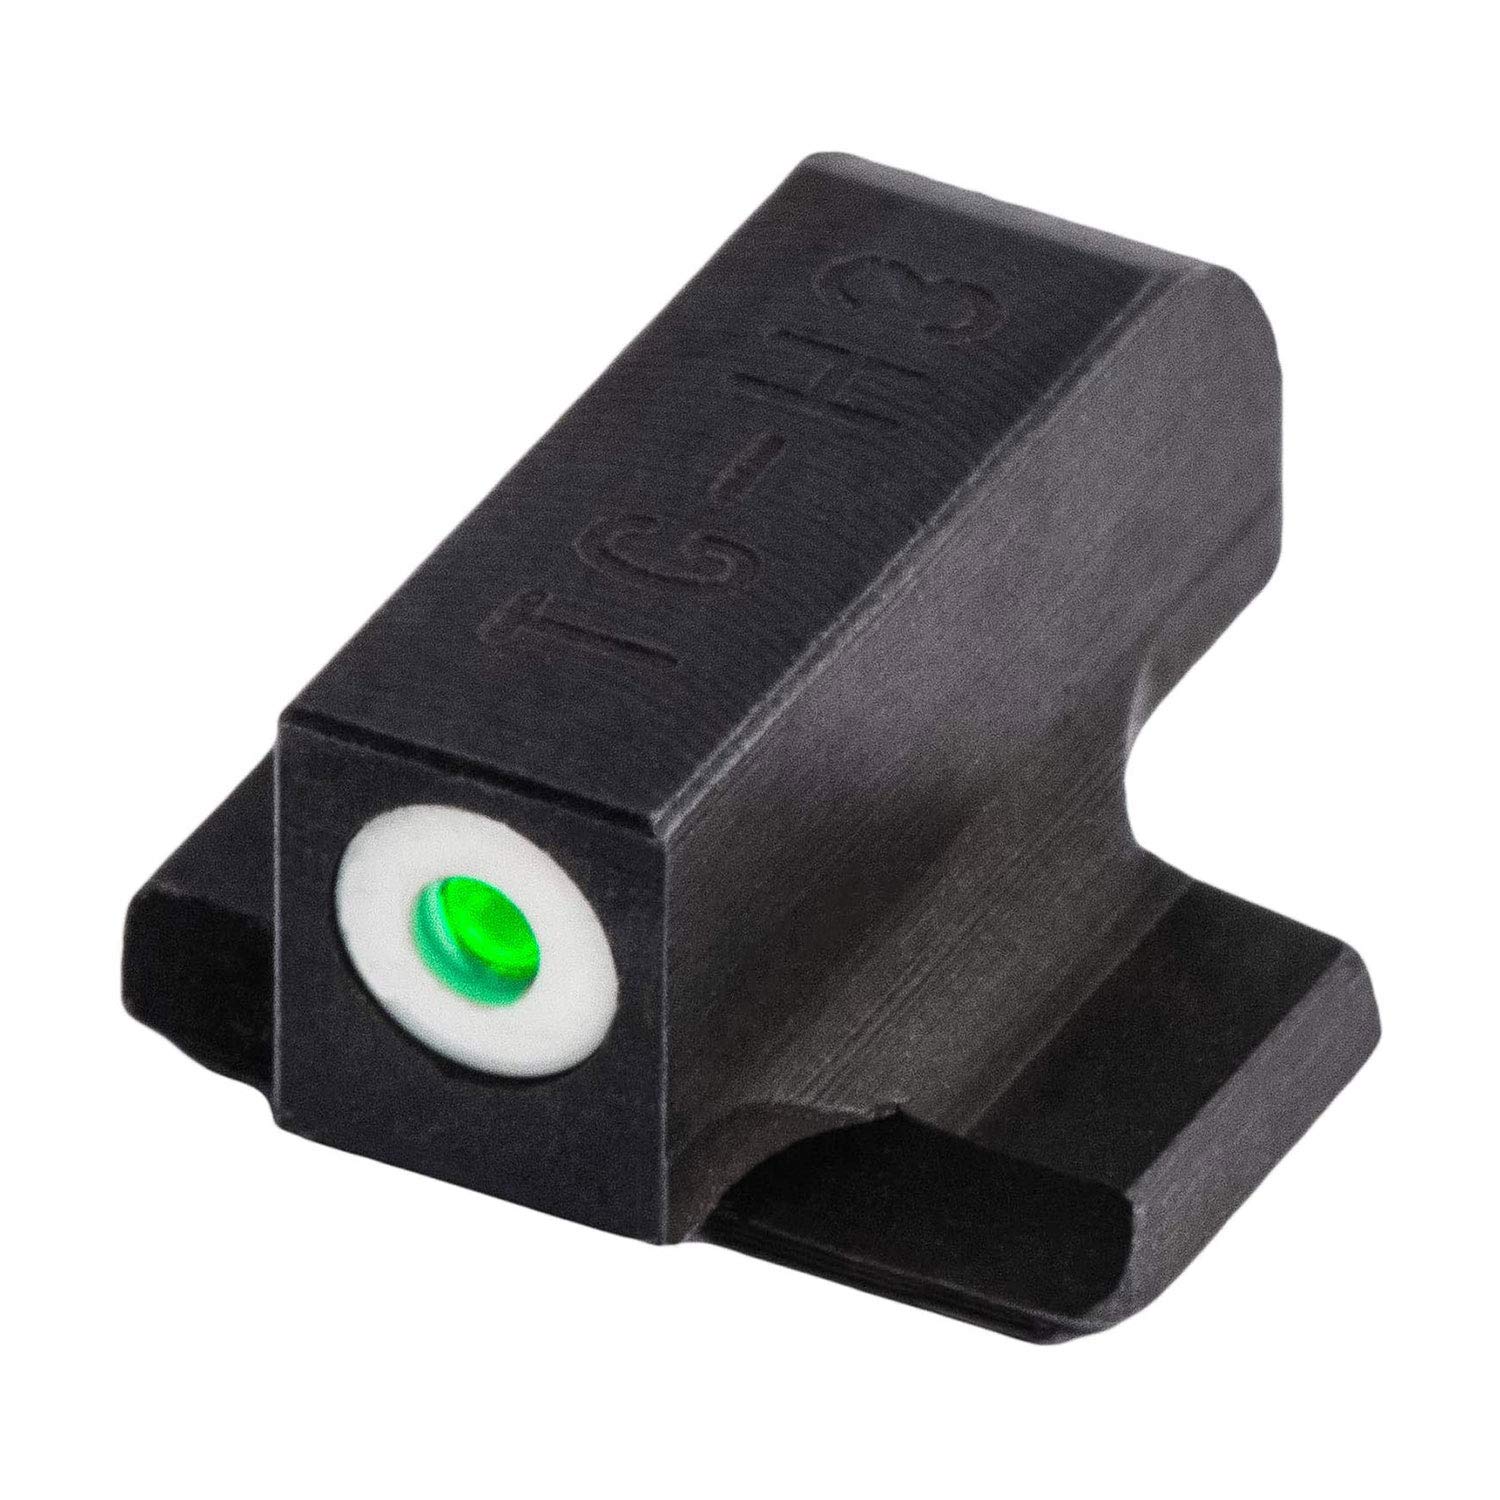 TruGlo Tritium Pro Glow in the Dark Gun Handgun Glock Pistol Laser Sight Accessories with Rear Colors for Beretta PX4 Storm and Green Light, Black